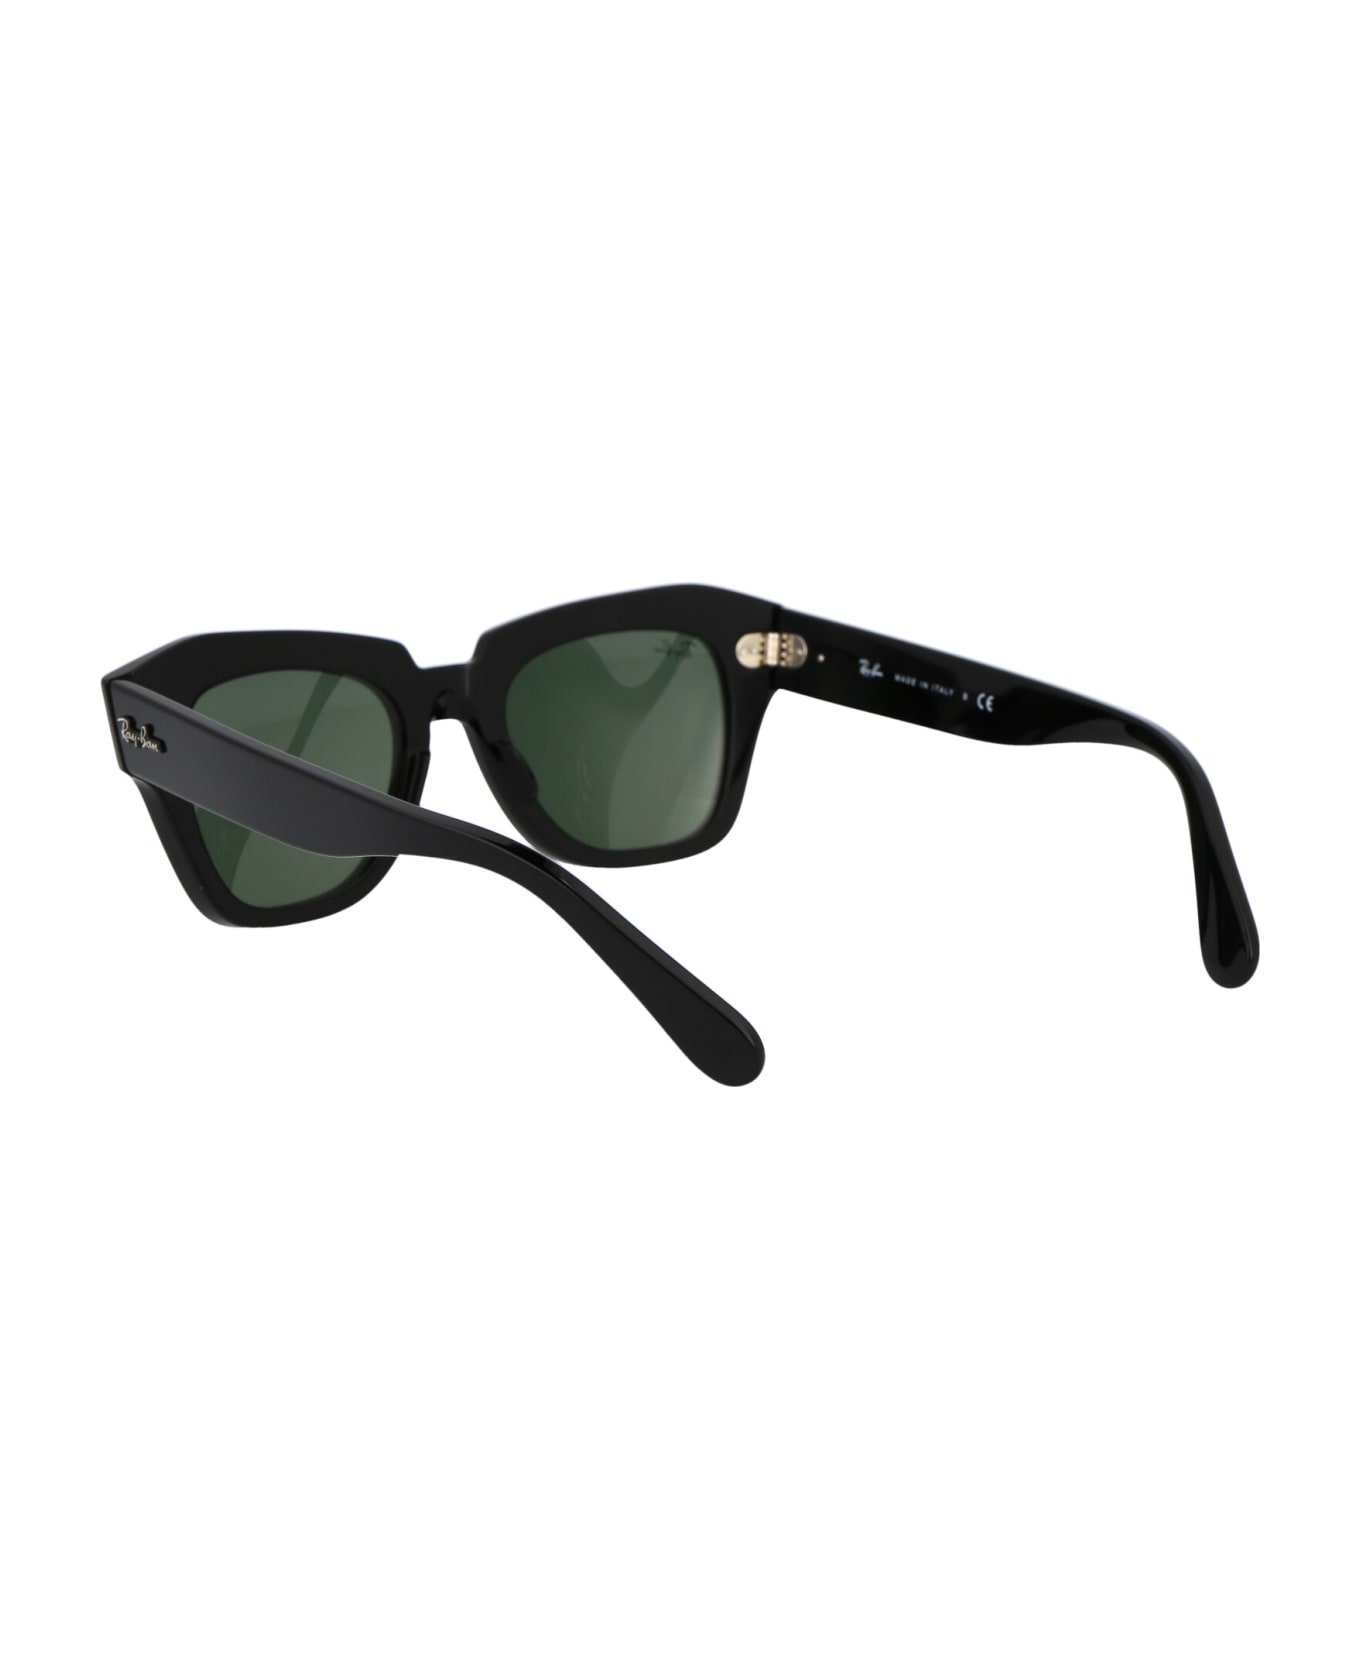 Ray-Ban State Street Sunglasses - 901/31 BLACK